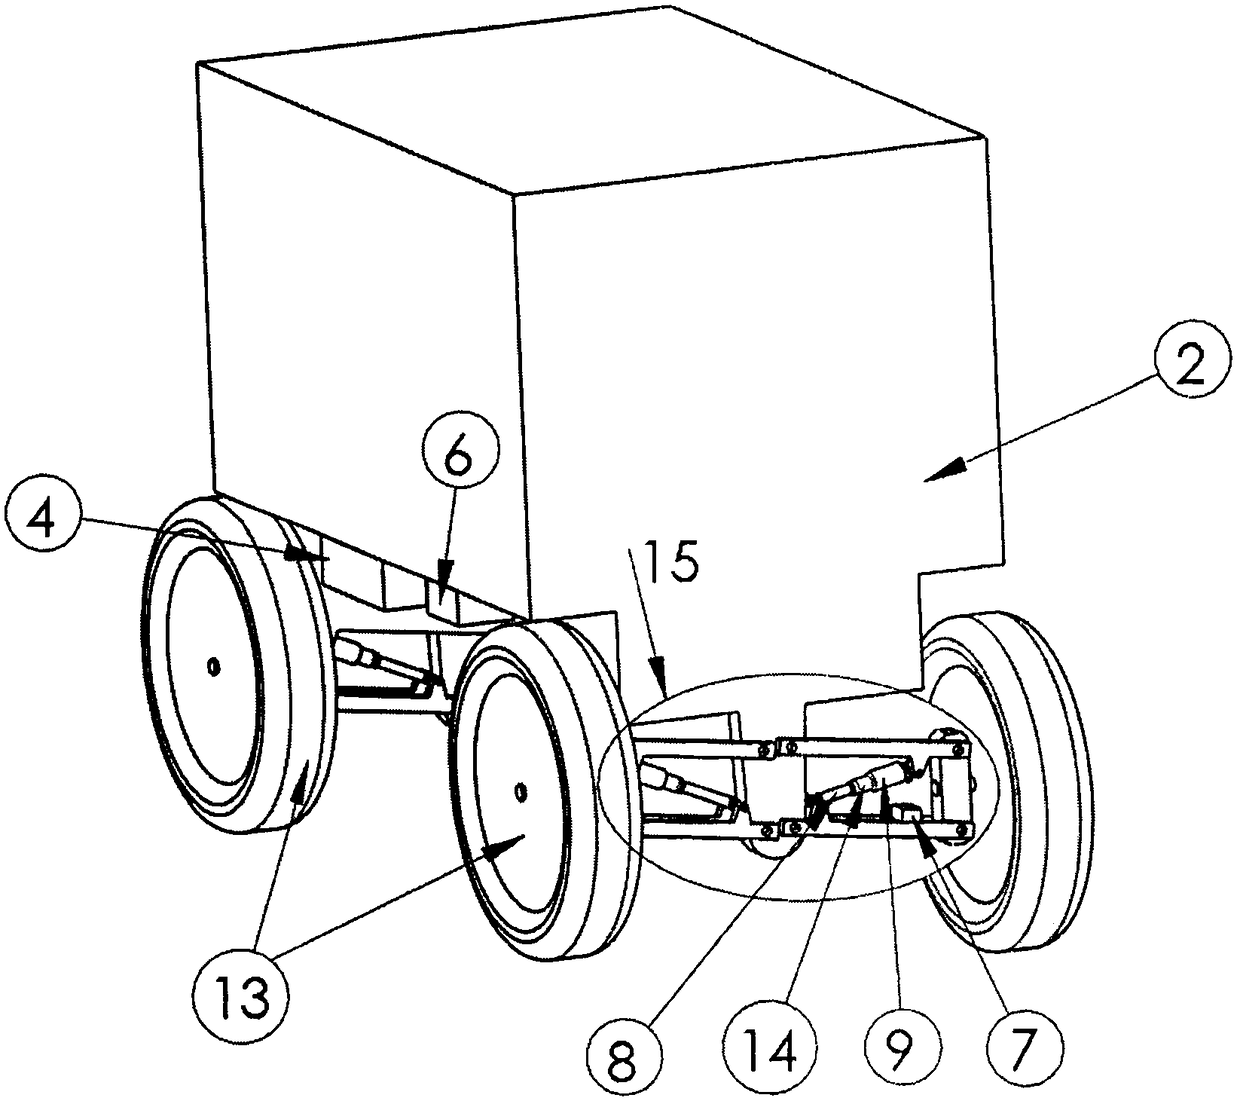 Self-balance vehicle device and corresponding control method thereof